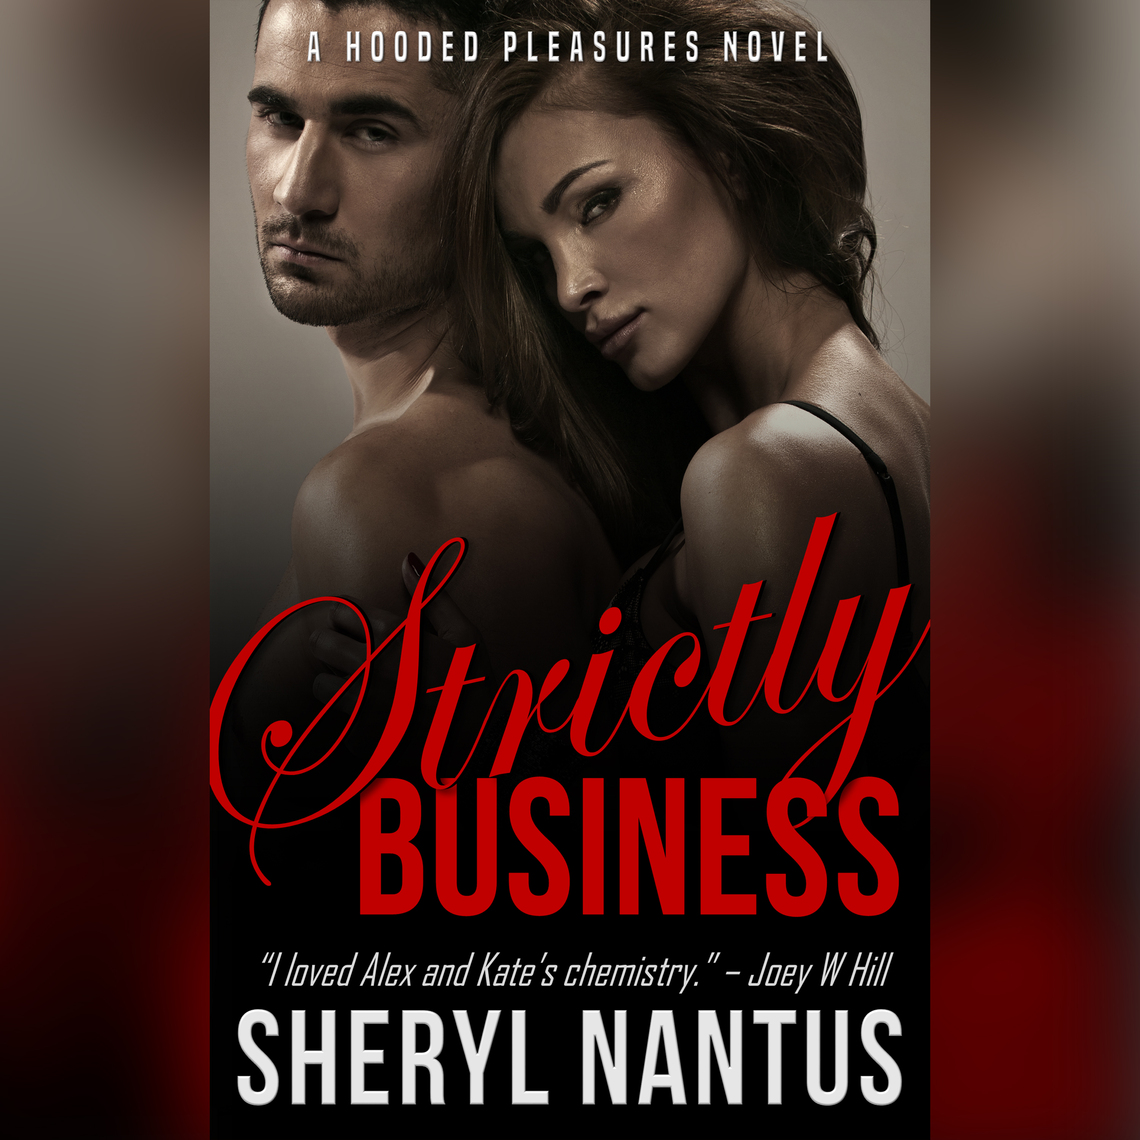 Strictly Business by Sheryl Nantus